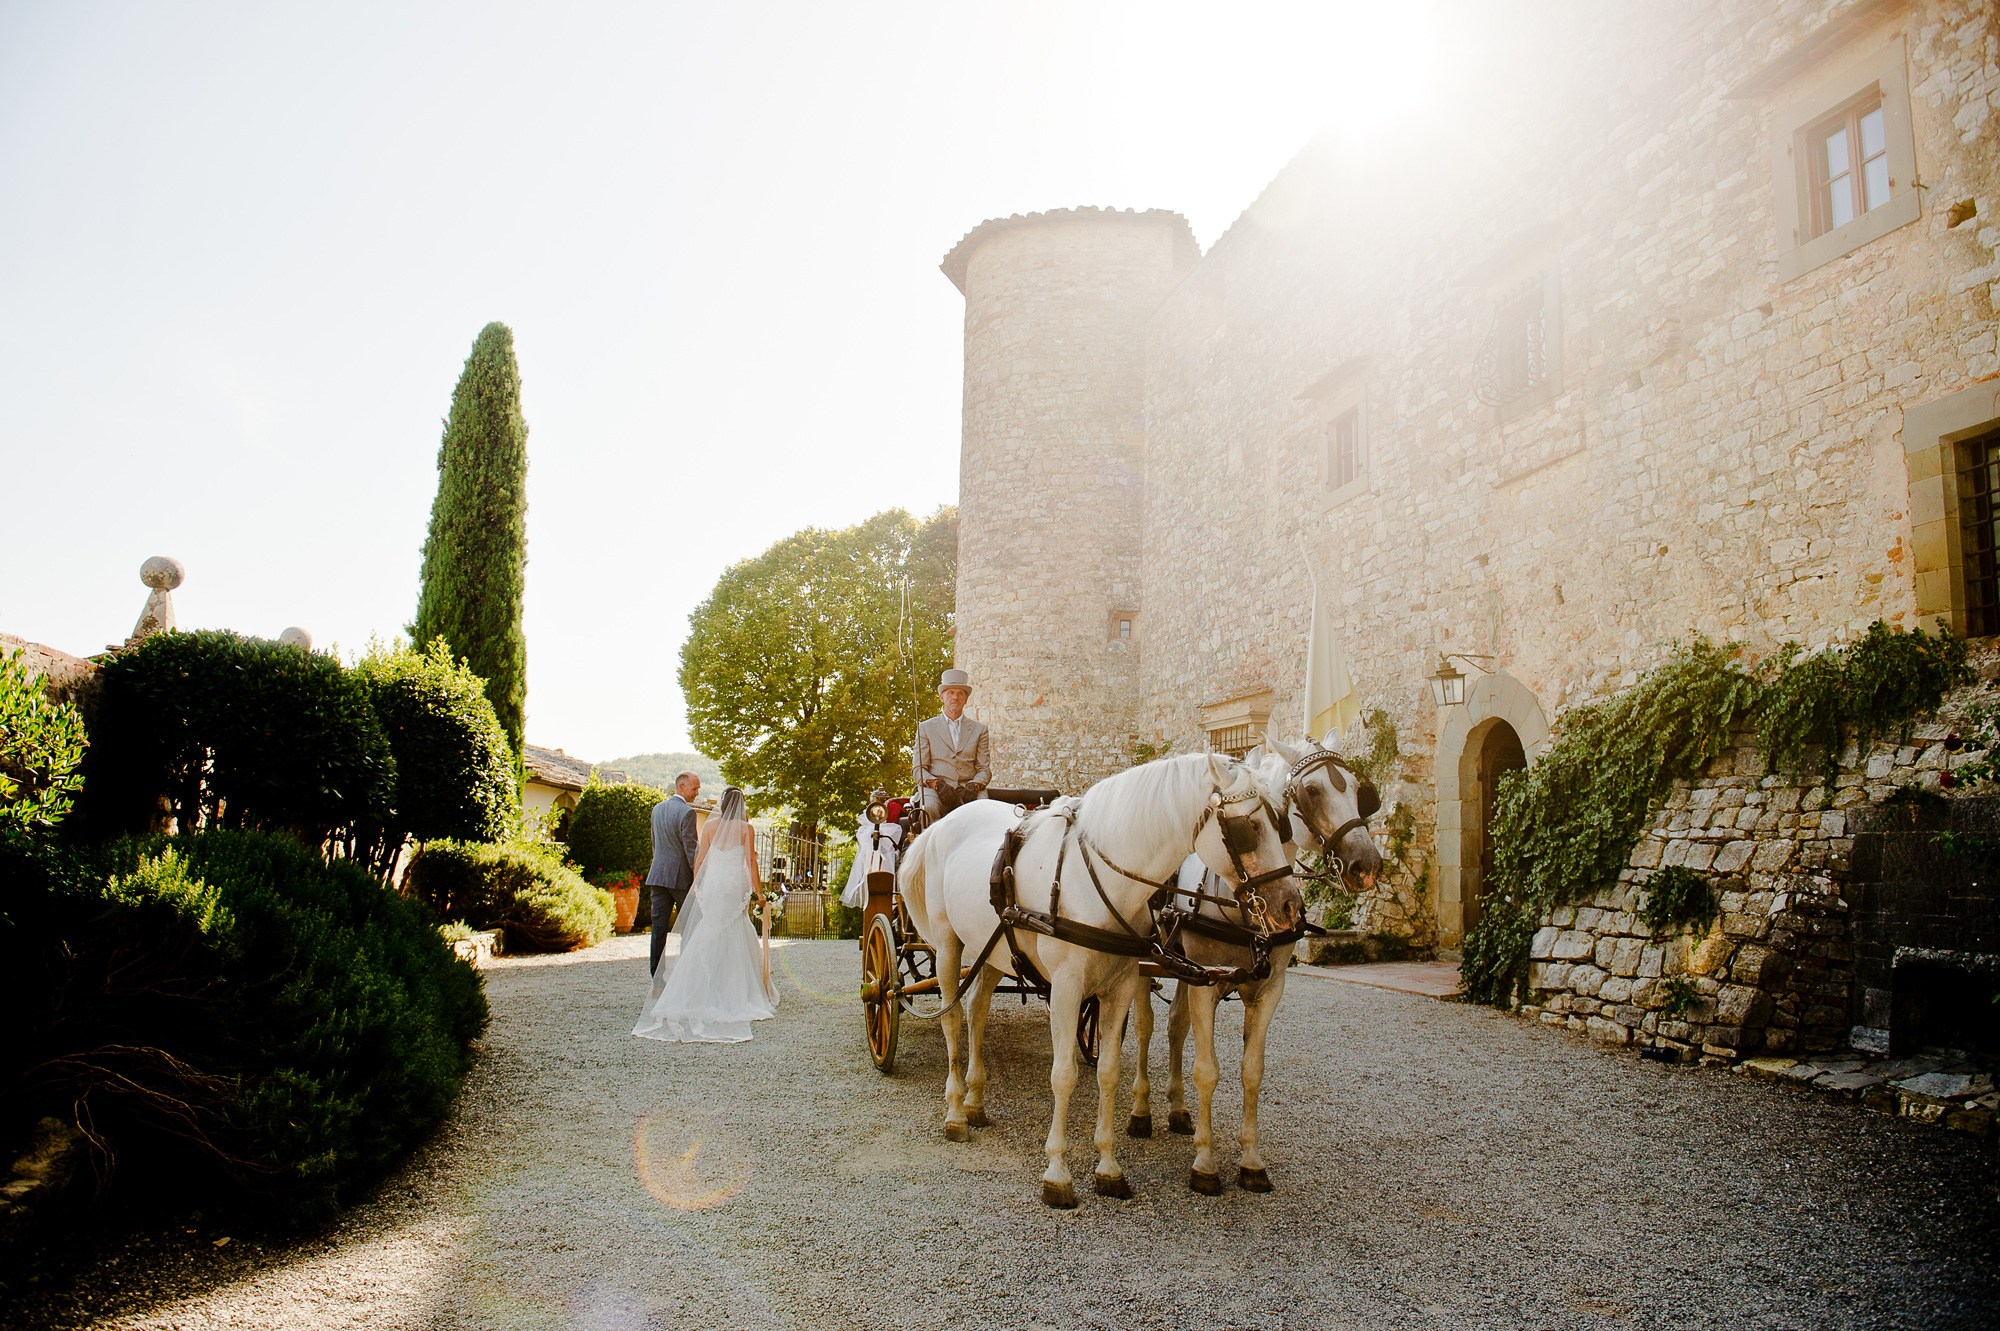 4400-castello-di-meleto-tuscany-wedding-moscastudio-ONLINE.jpg